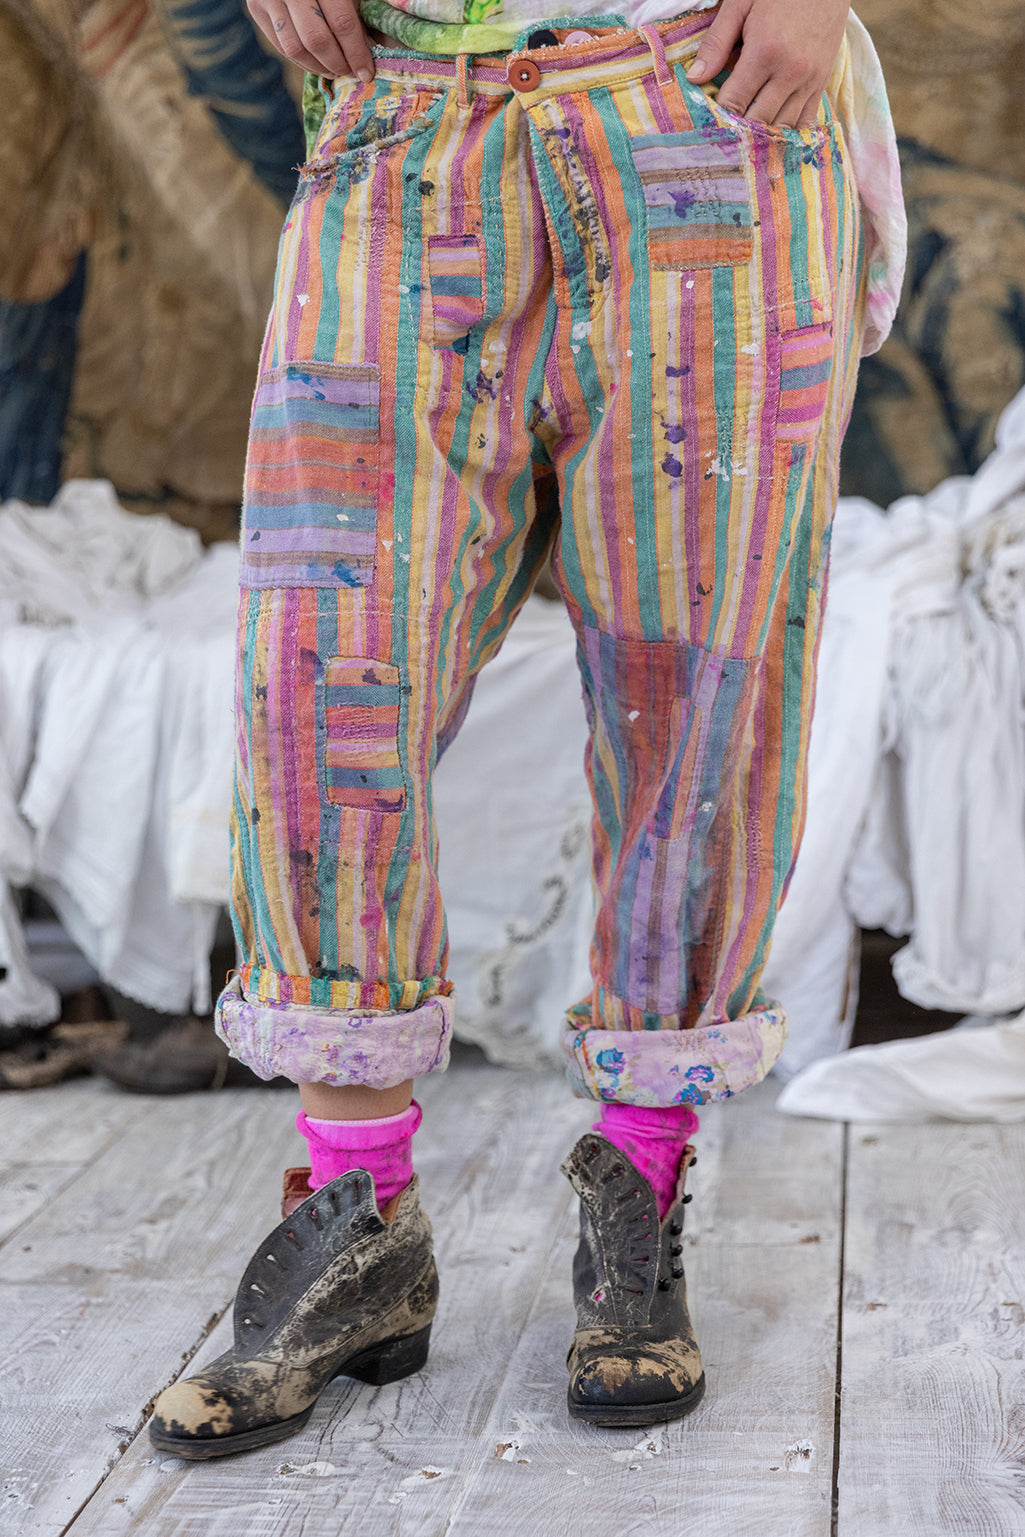 Striped Miner Pants